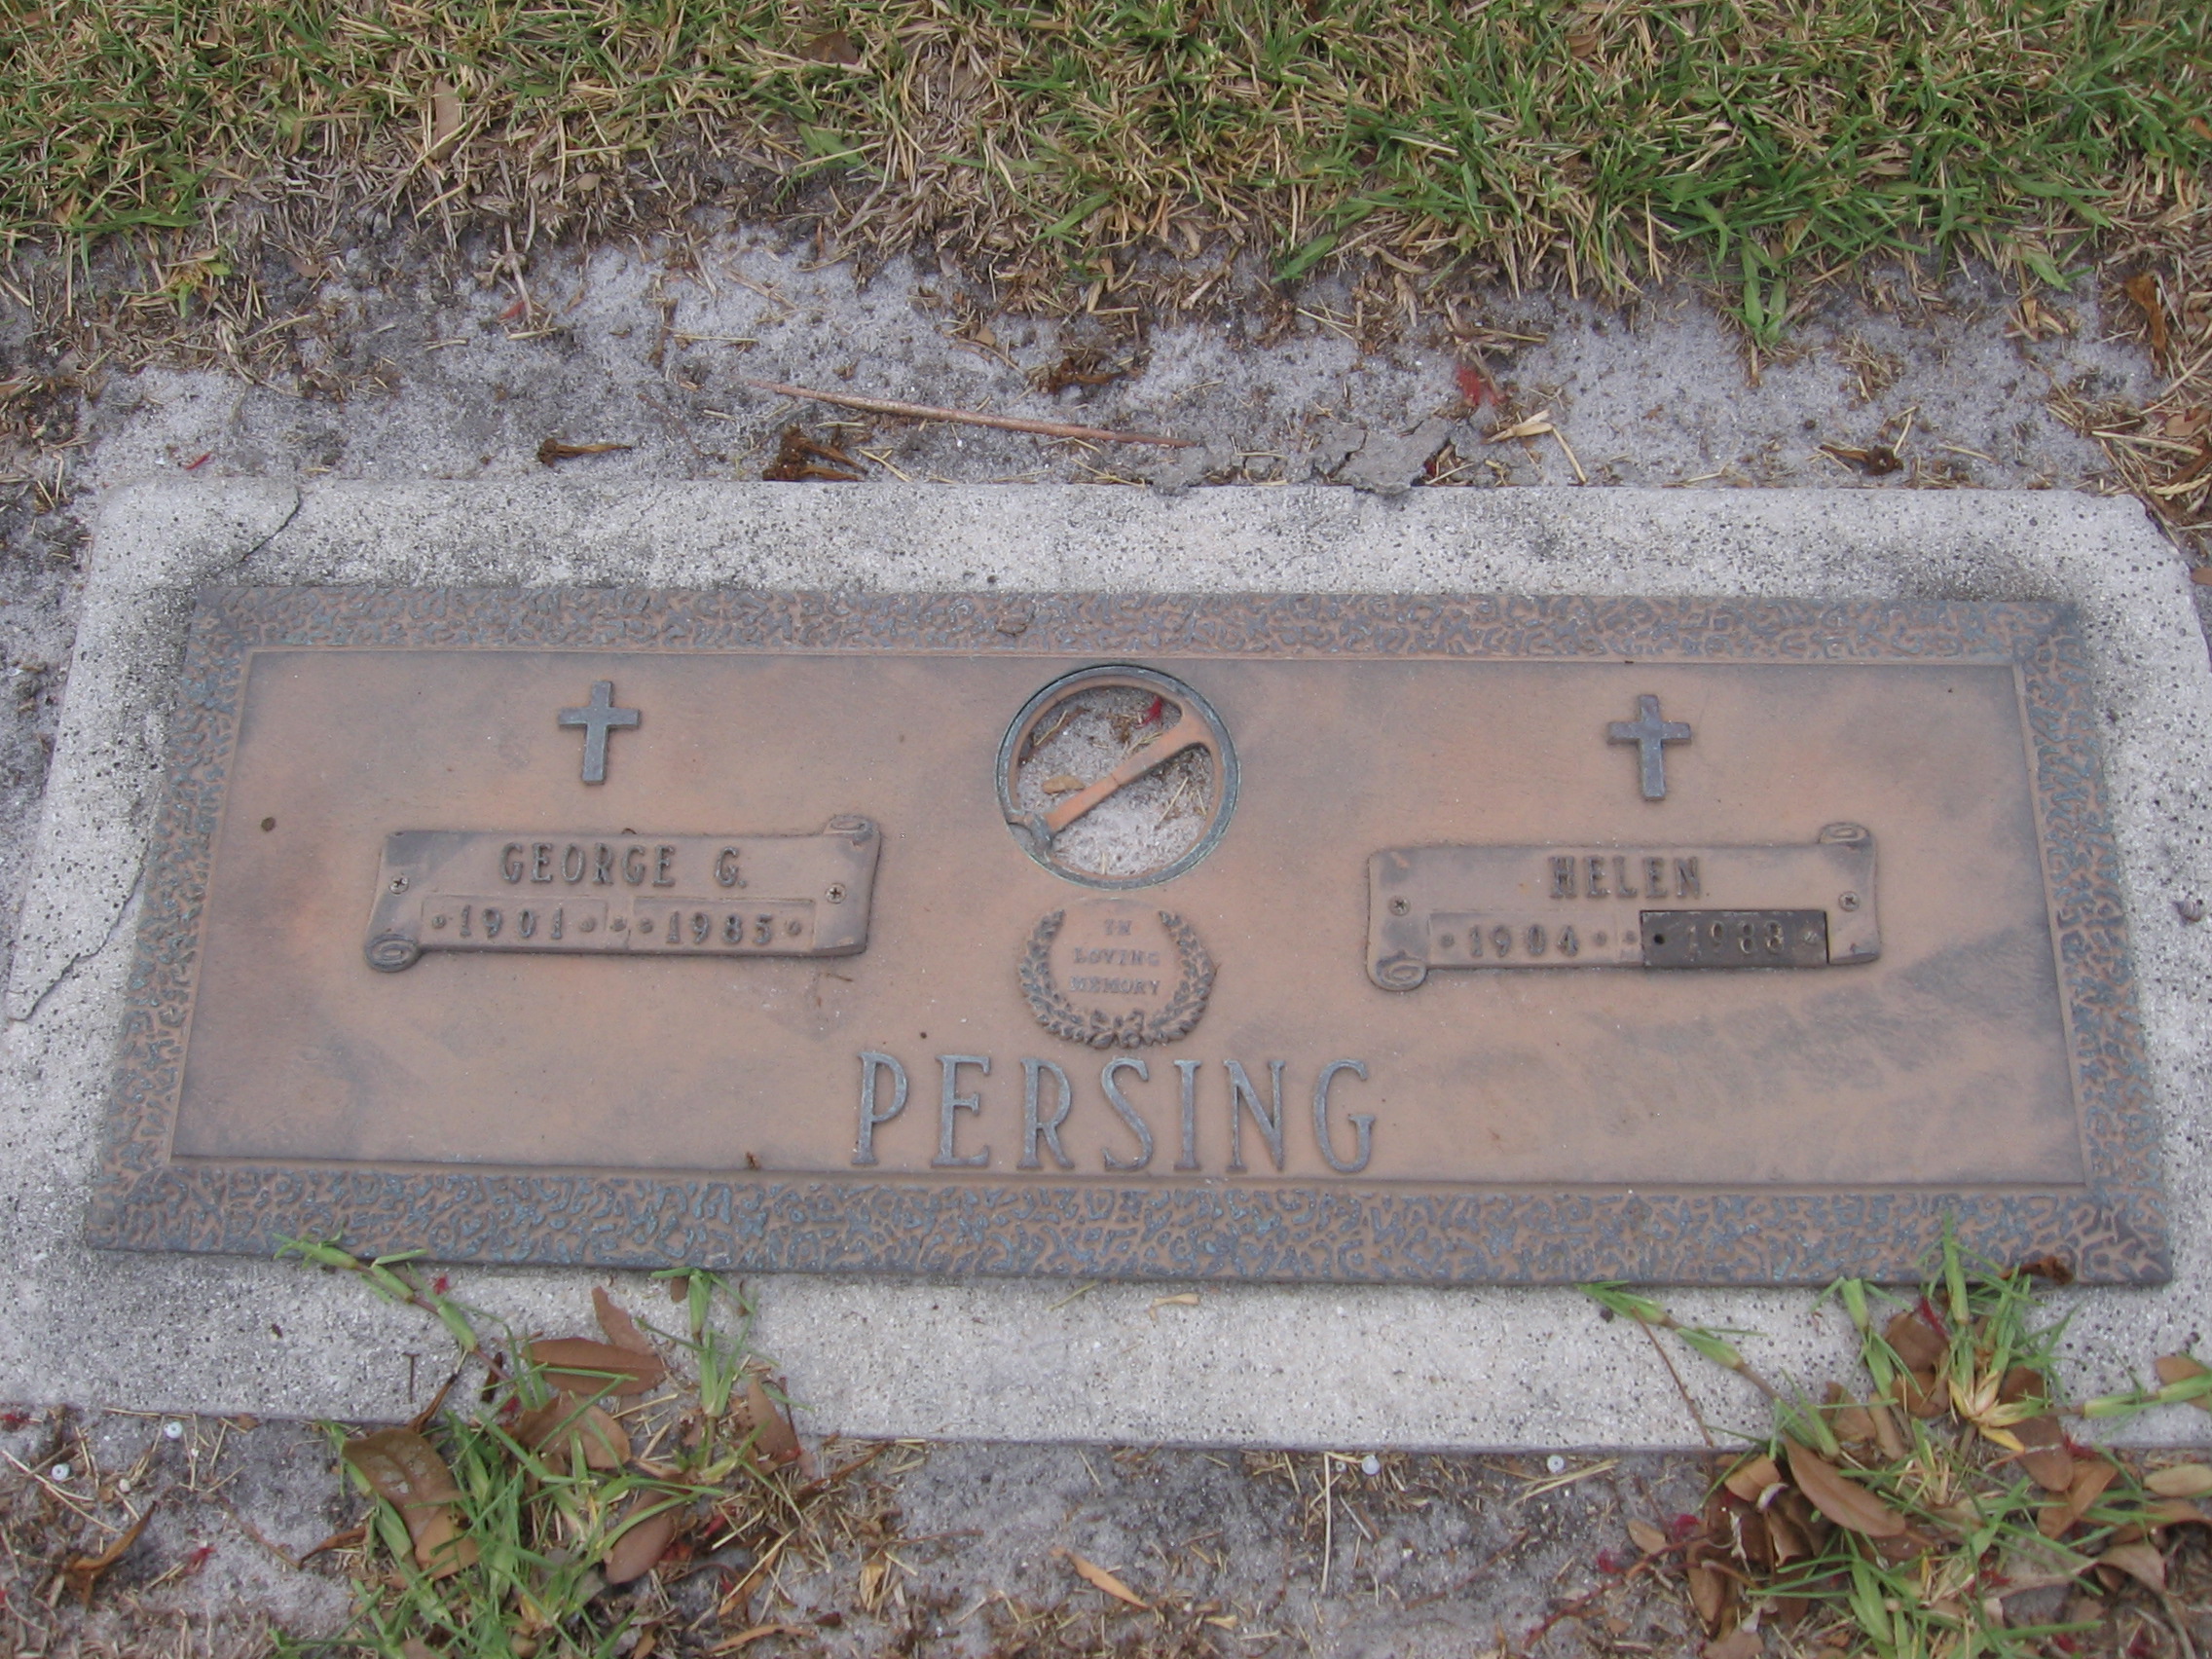 George G Persing